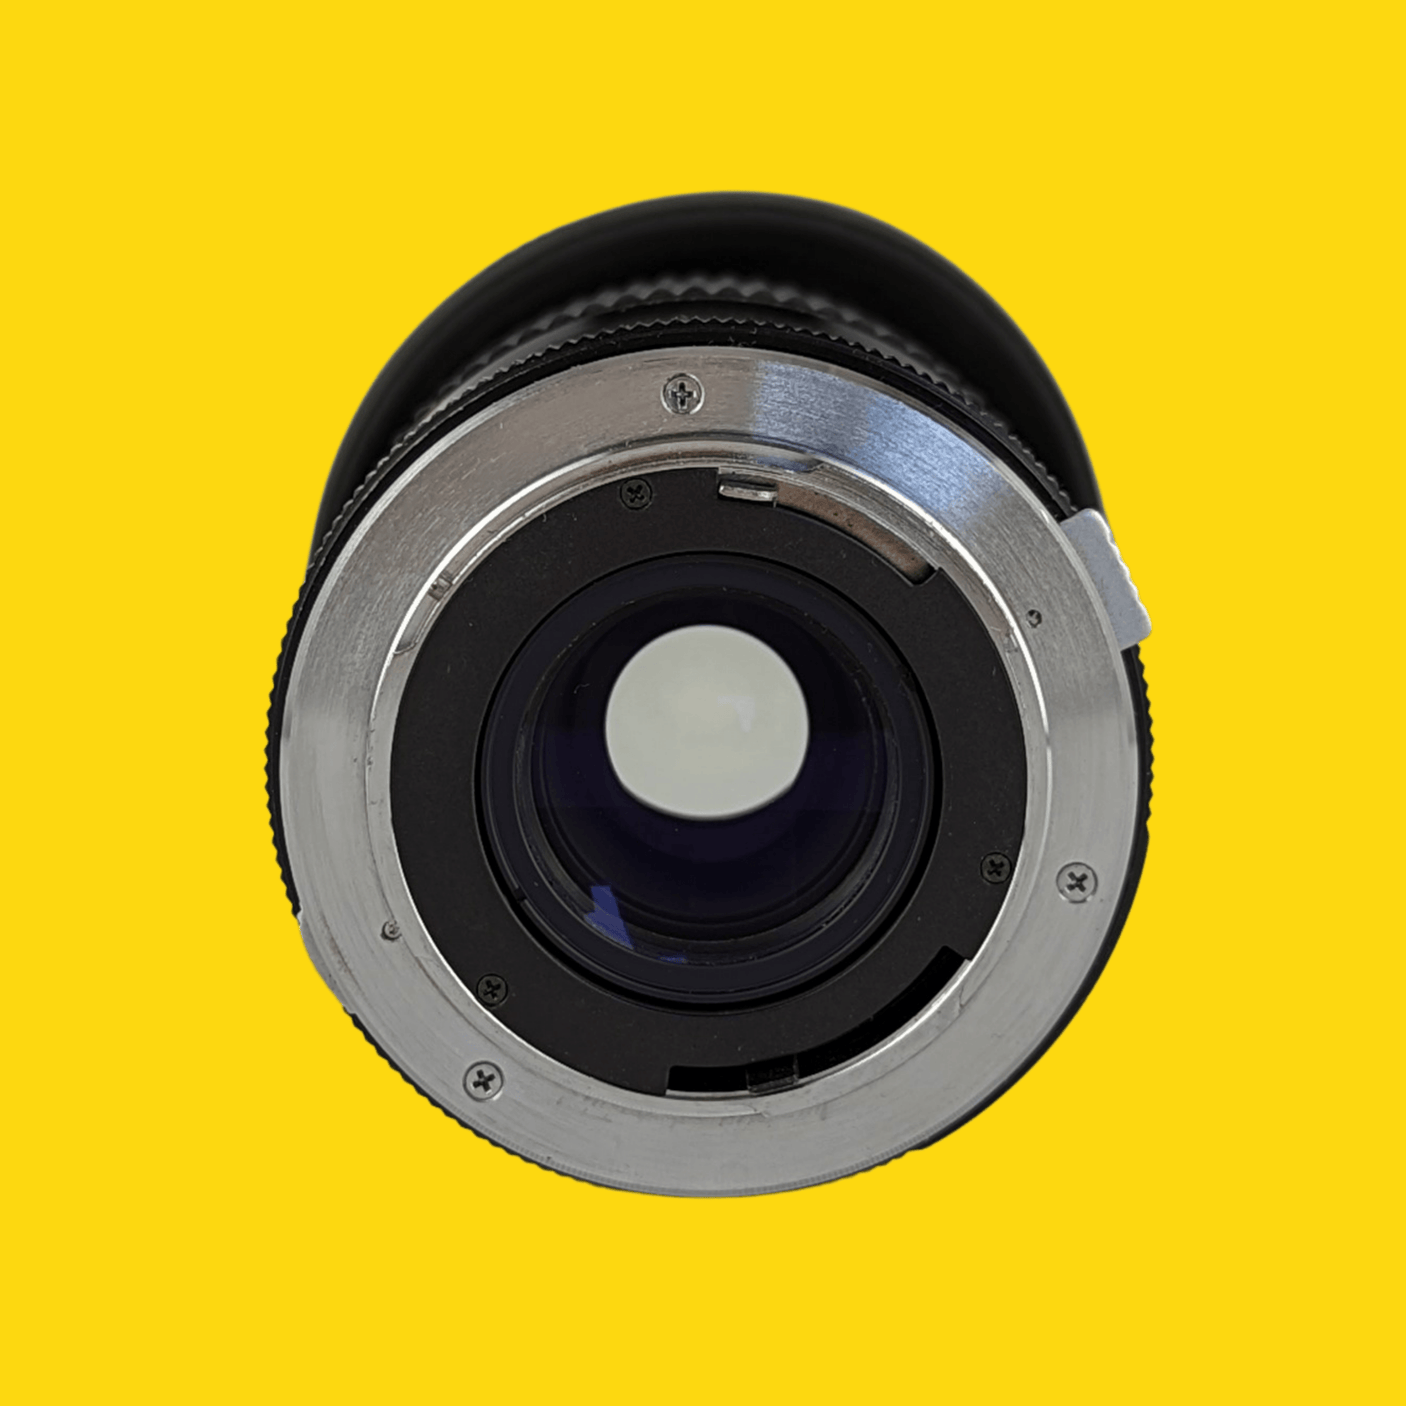 Mitakon MC Zoom 80mm-200mm f/4.5 Camera Lens